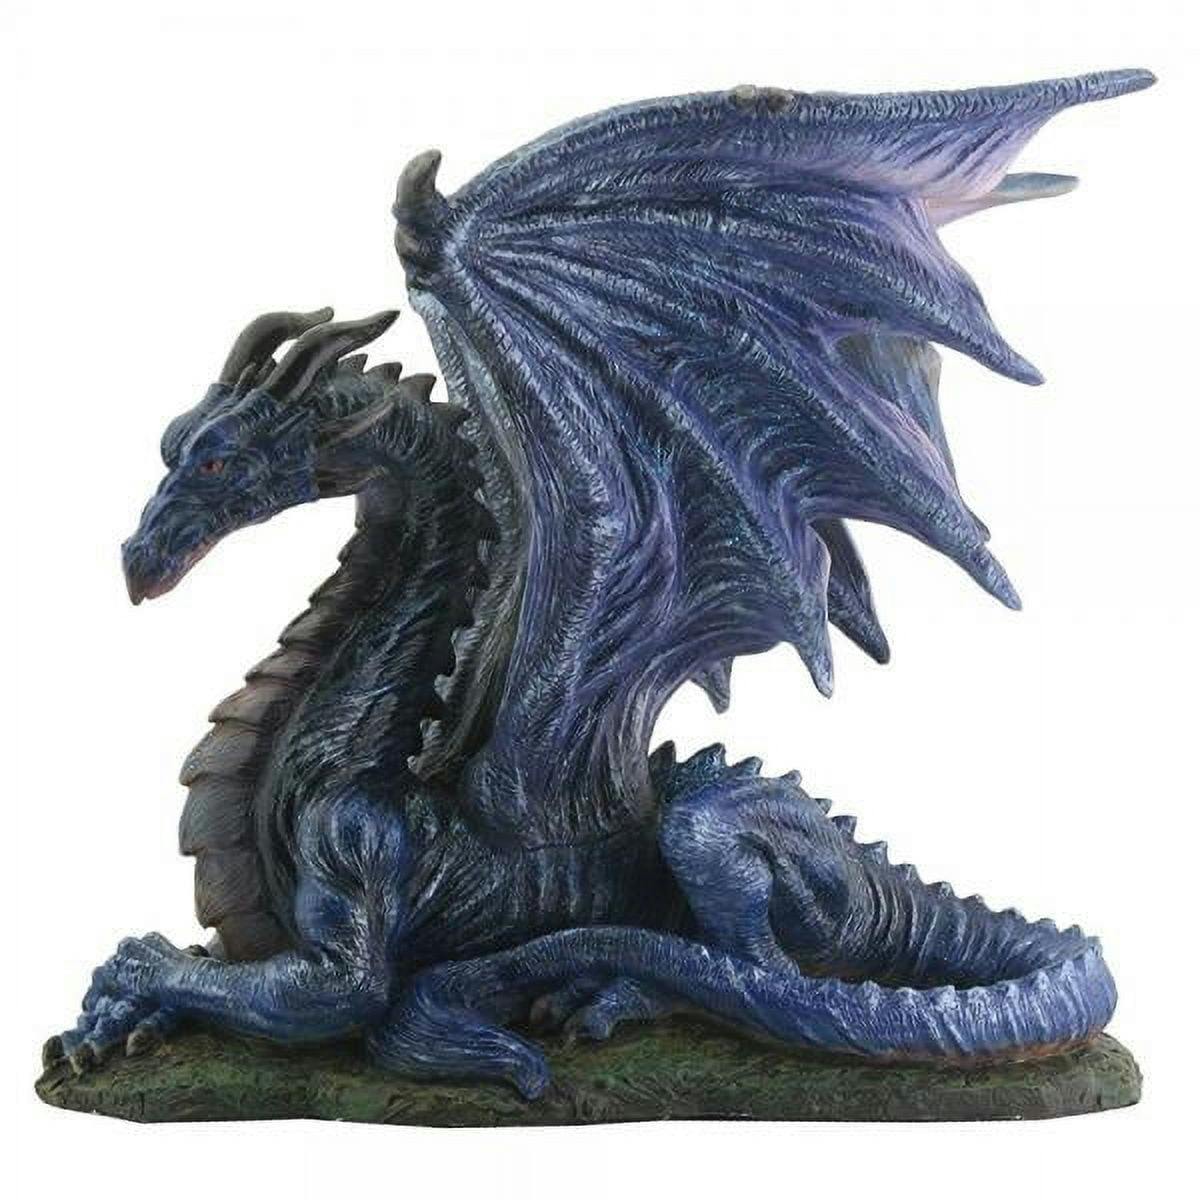 Elegant Midnight Blue Dragon Figurine in Repose, Hand-Painted Resin